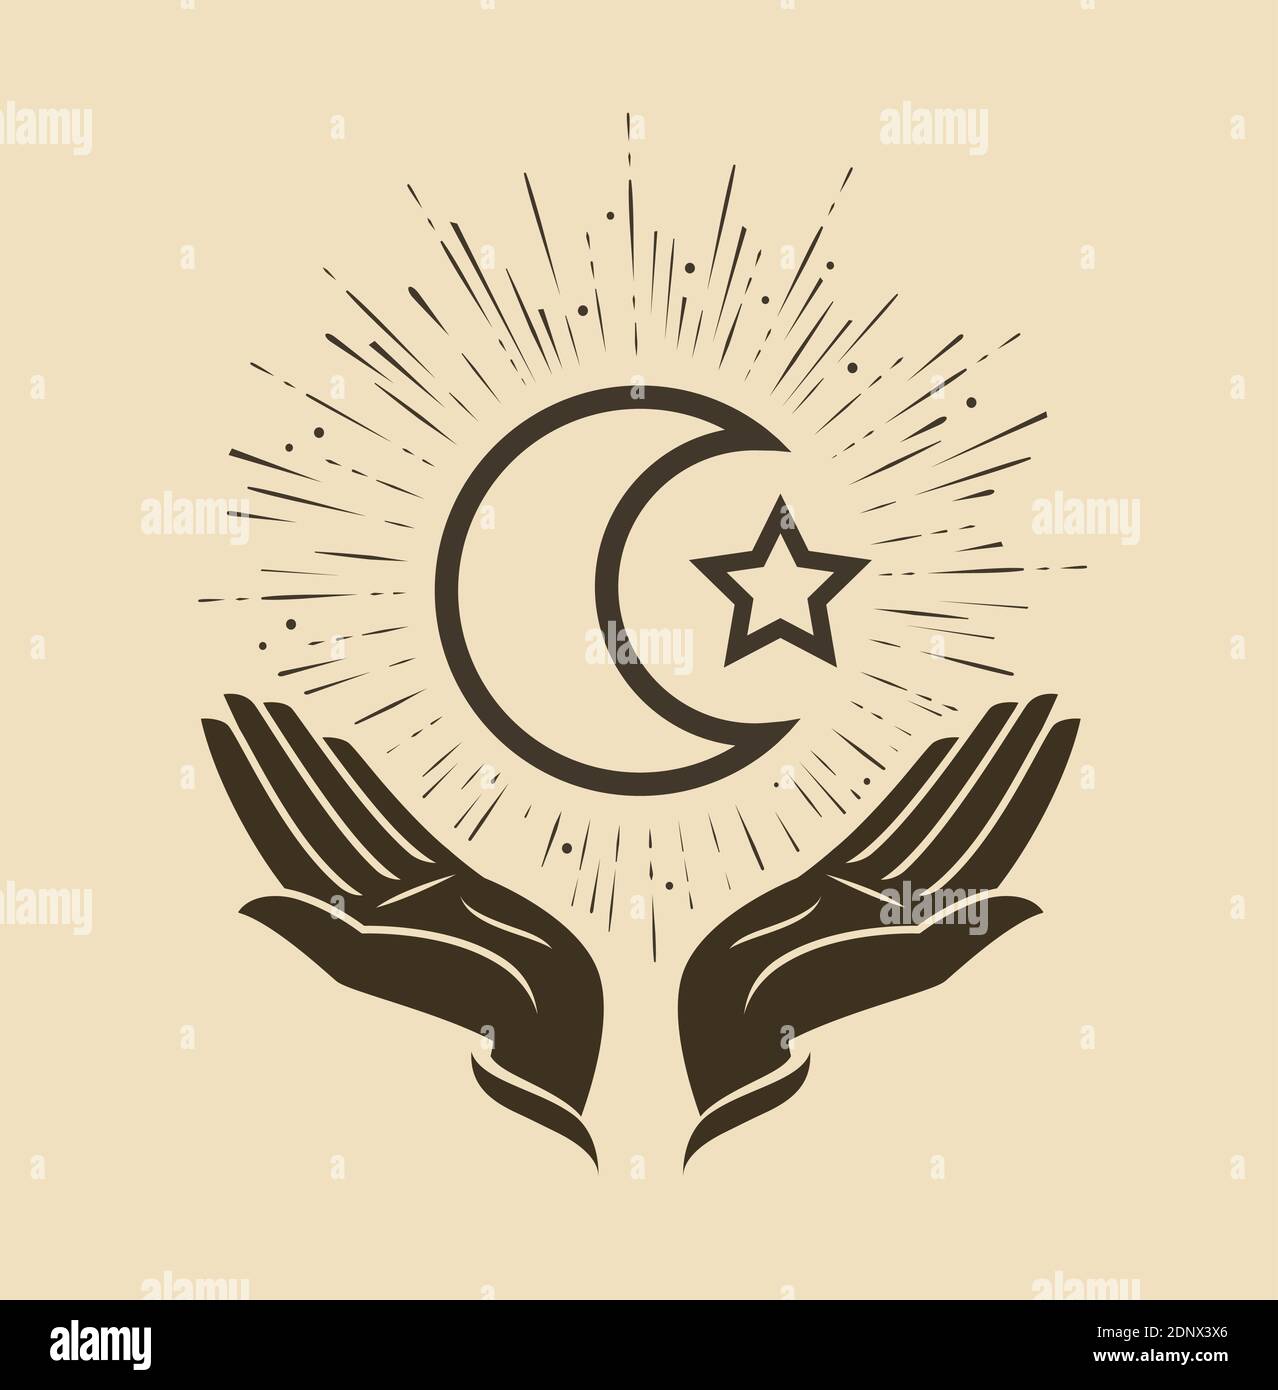 five pillars of islam symbols